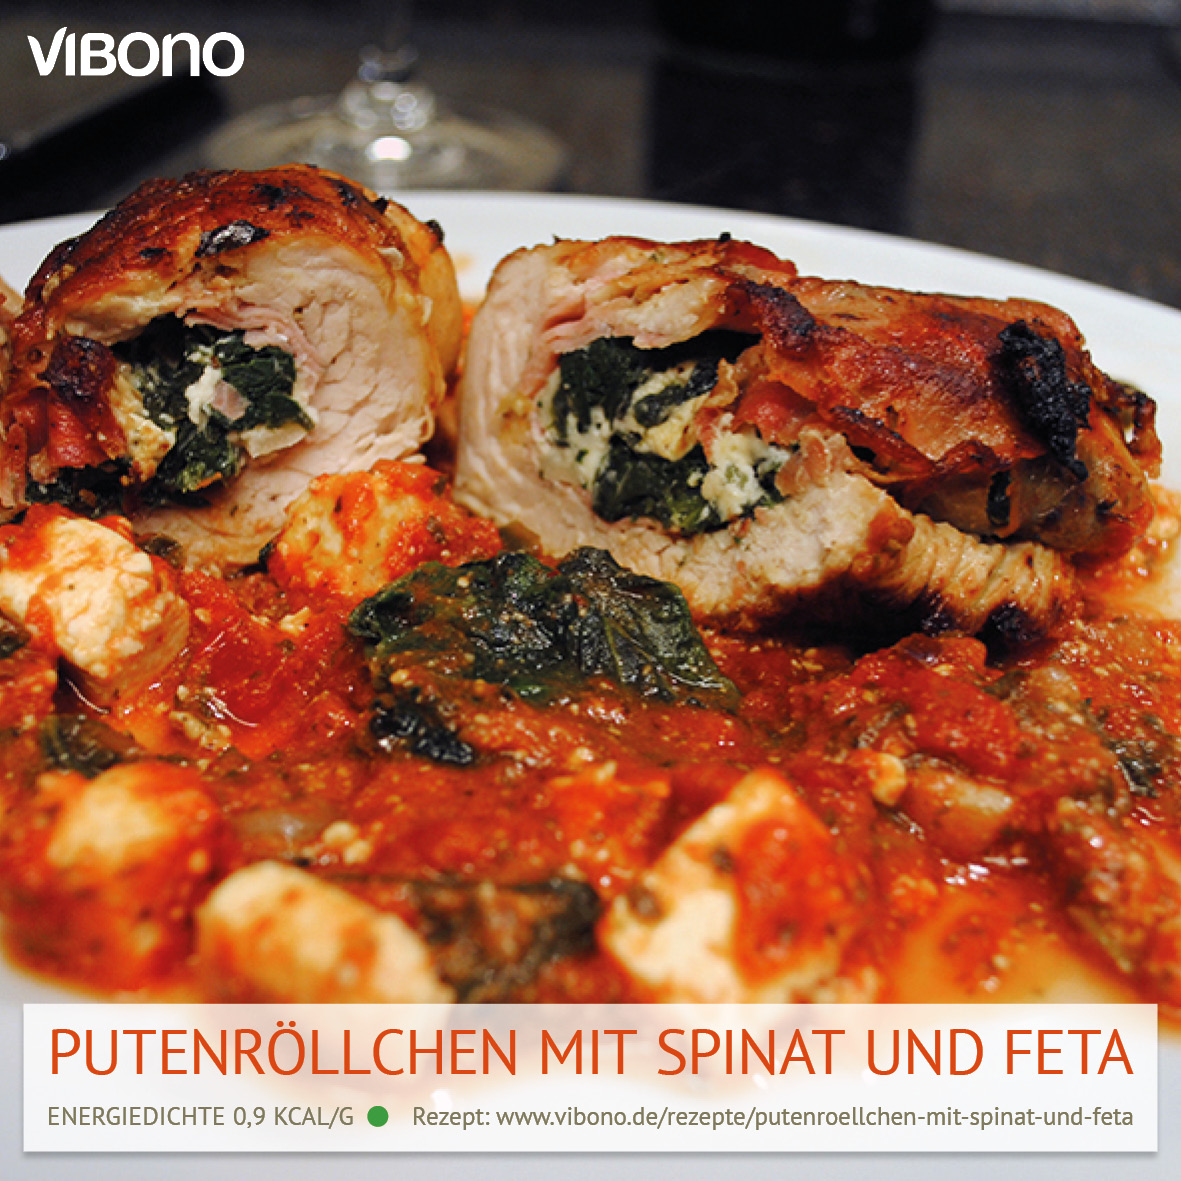 Putenröllchen mit Spinat und Feta in Tomatensoße | Vibono